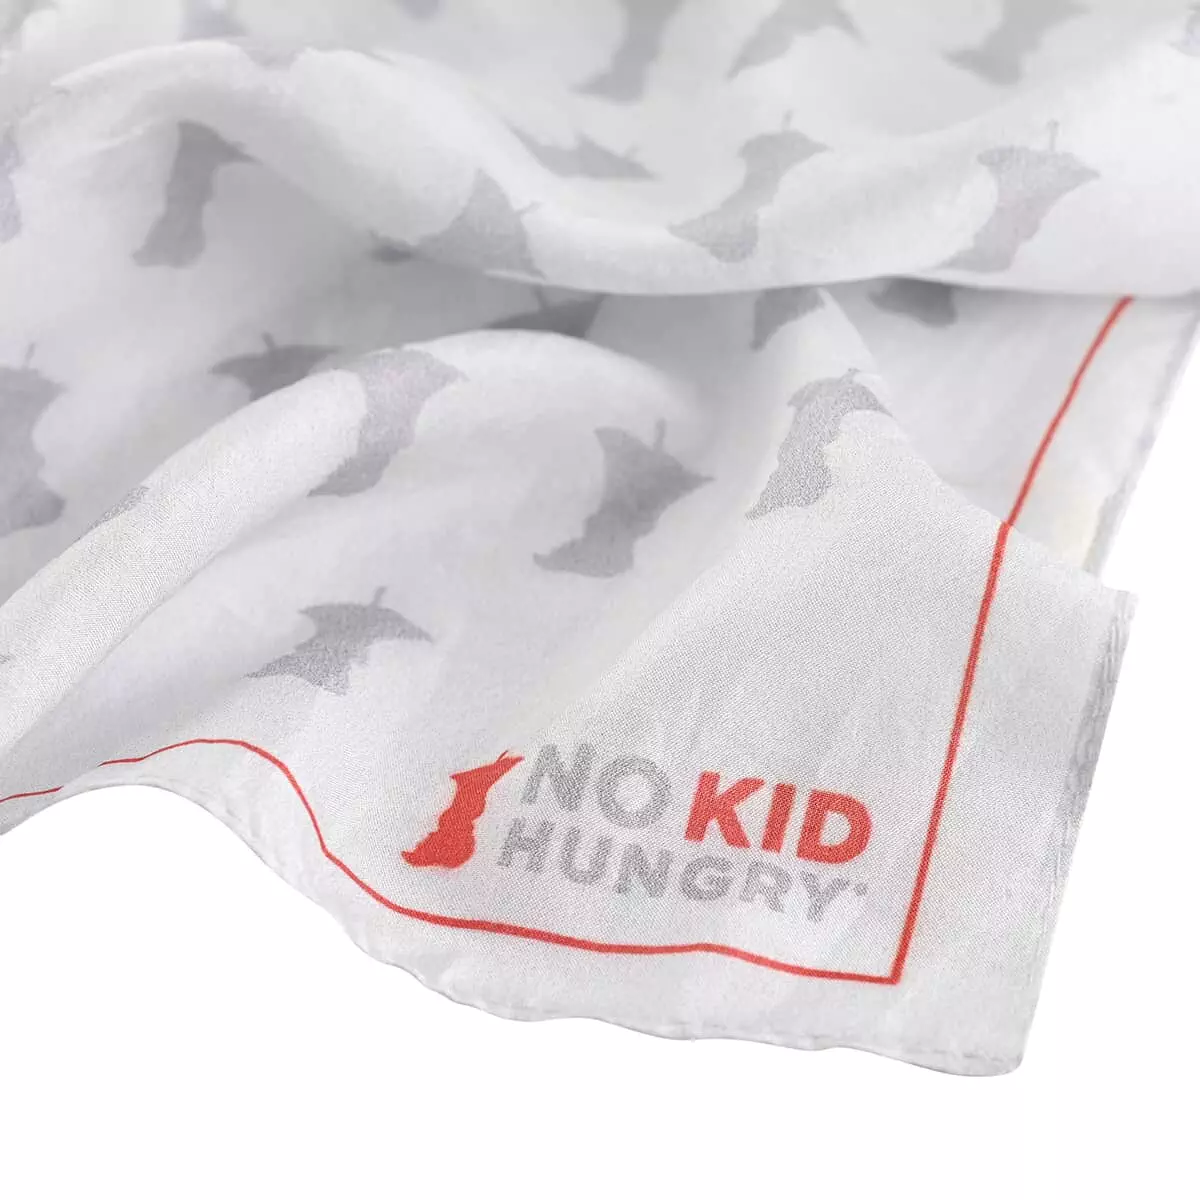 Tamsy No Kid Hungry Logo White Silk Scarf
